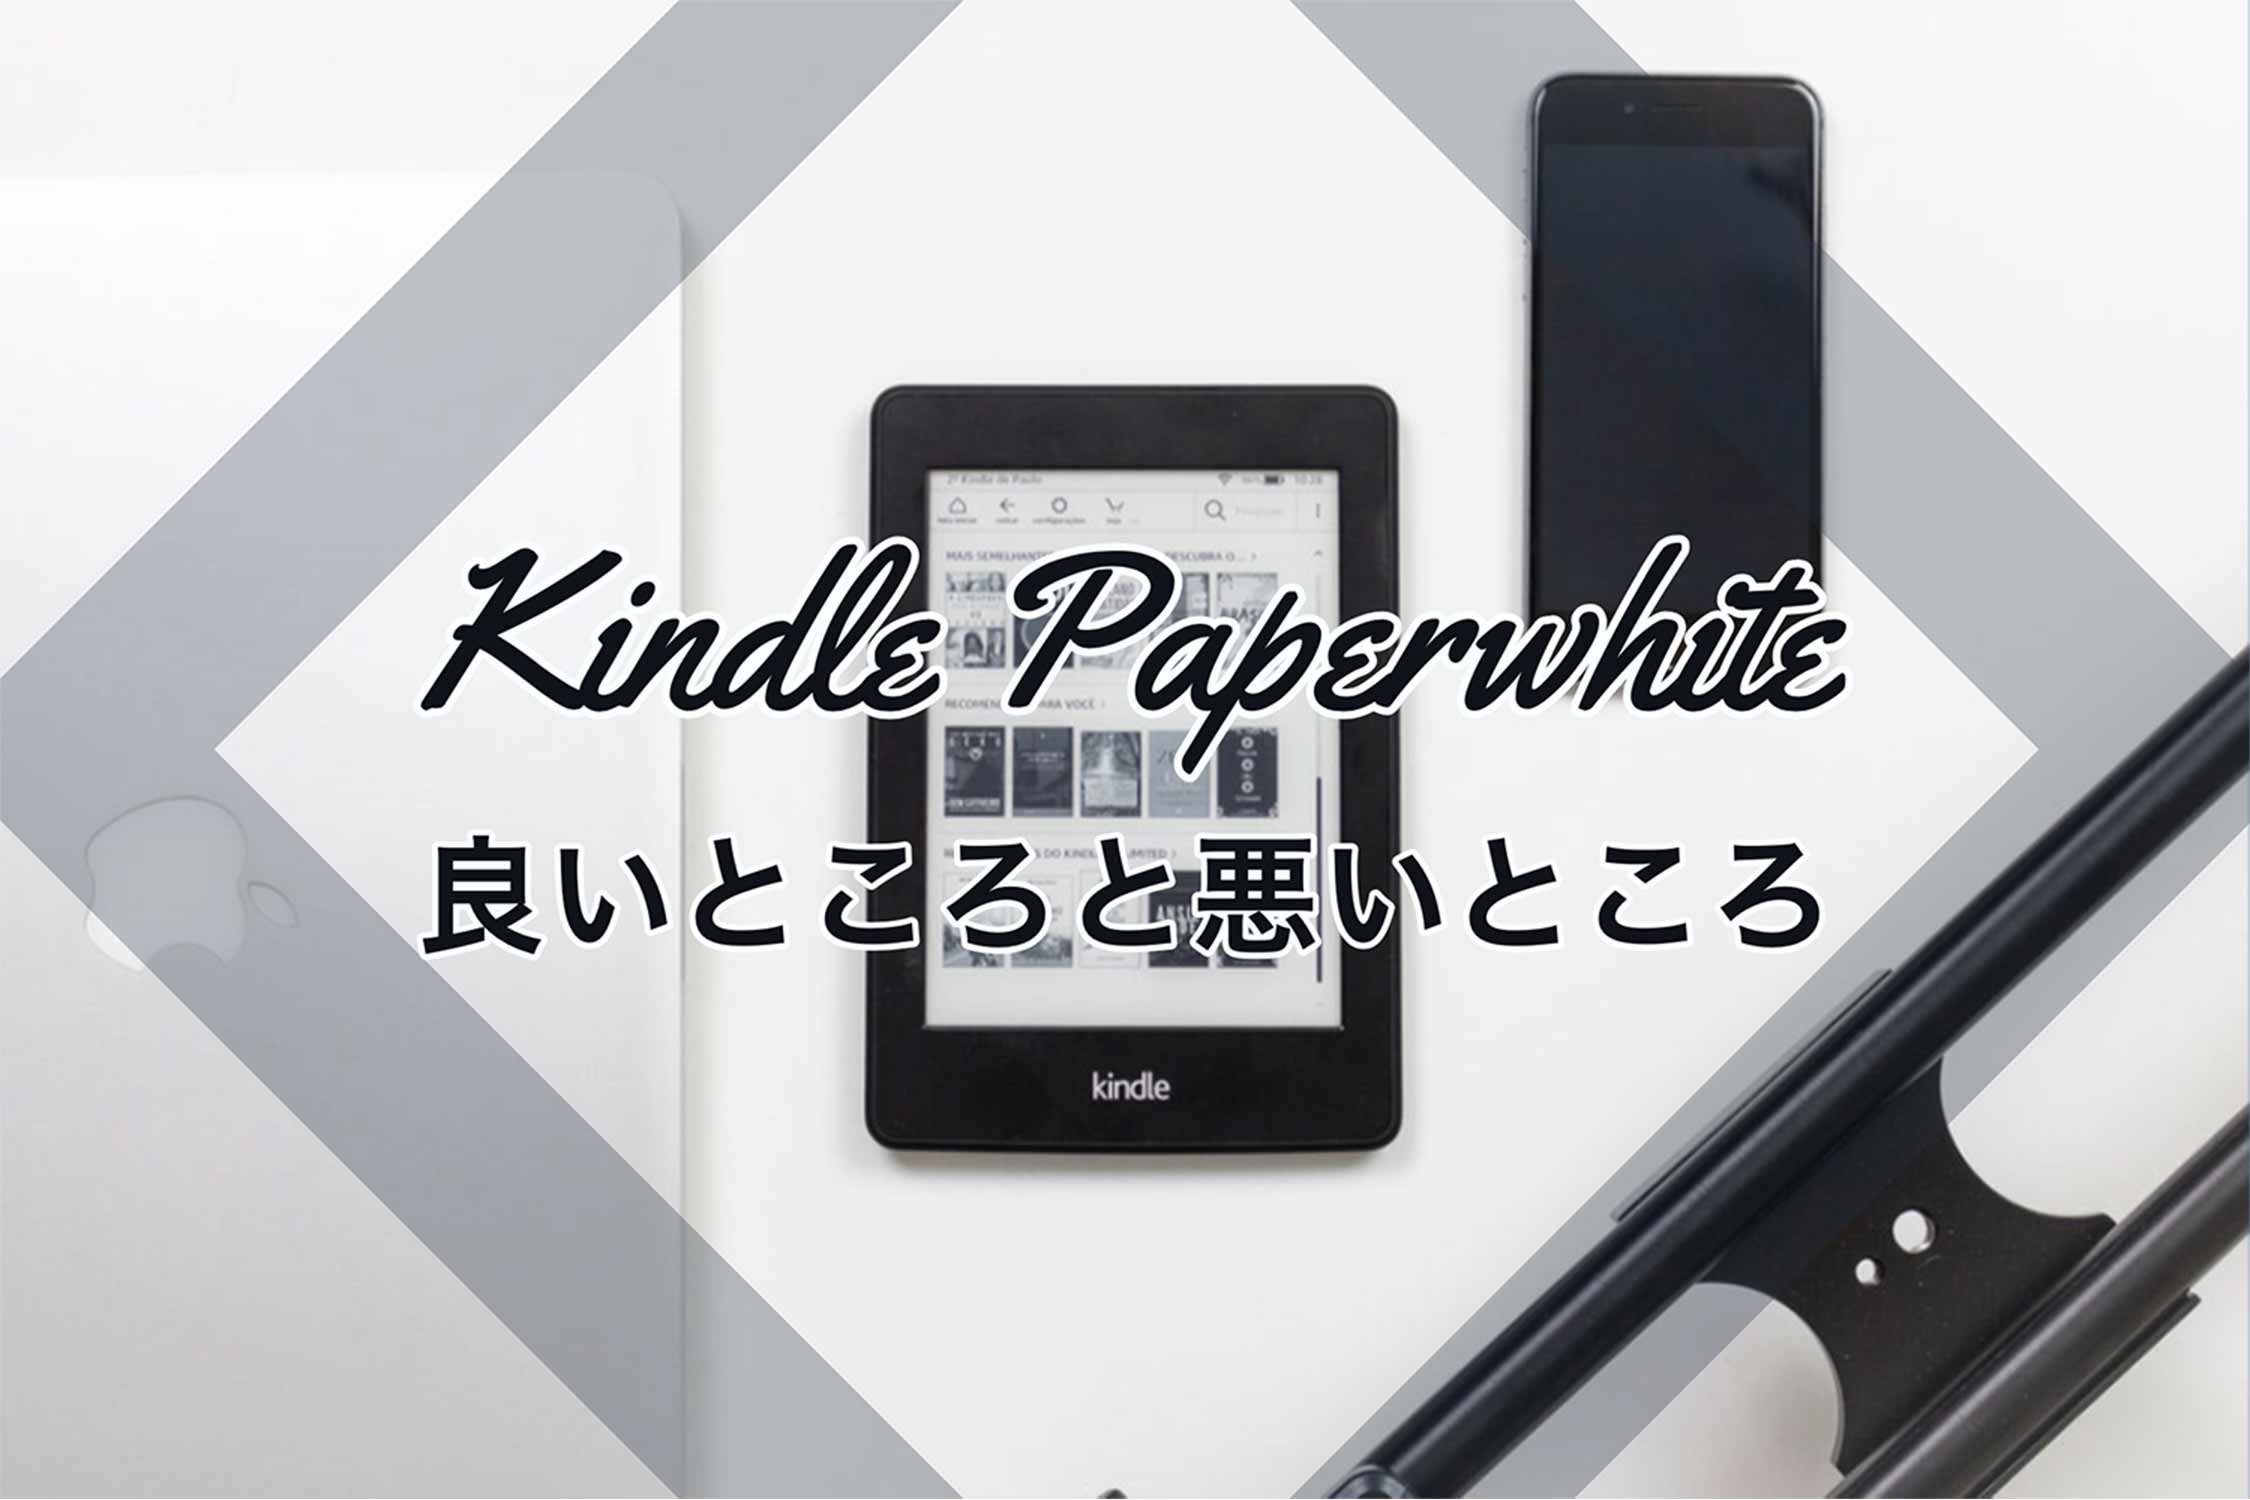 Kindlepaperwhite 記事 アイキャッチ